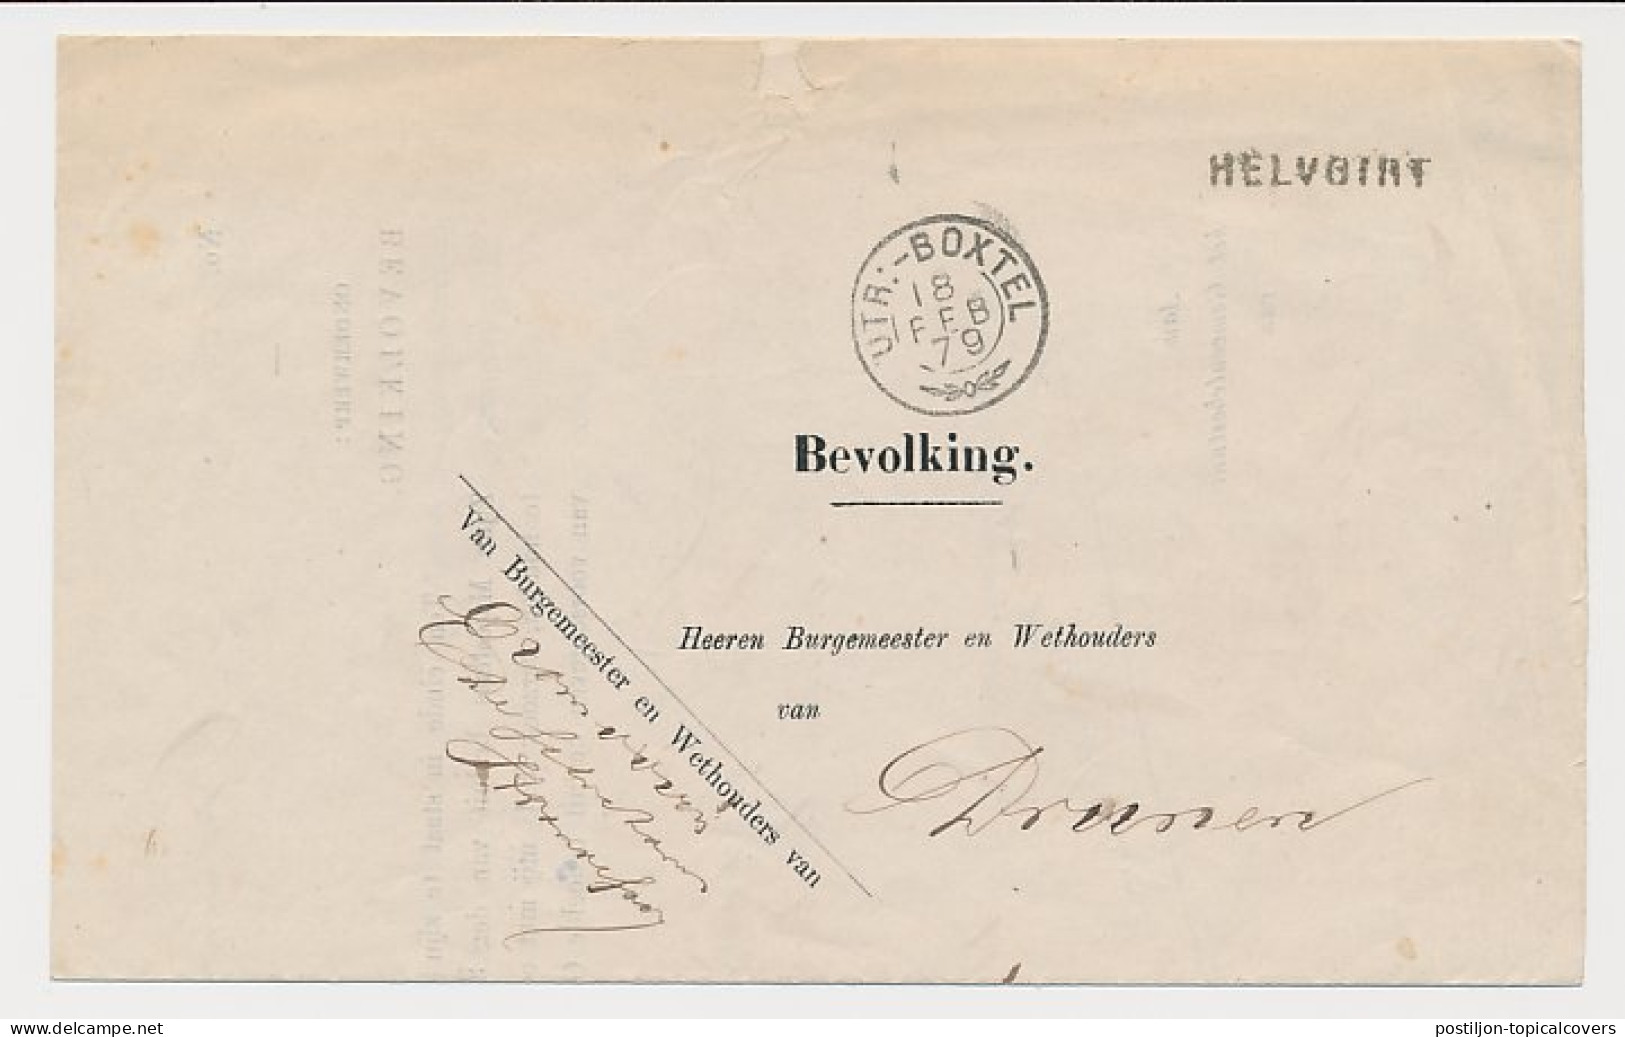 Helvoirt - Trein Takjestempel Utrecht - Boxtel 1879 - Covers & Documents